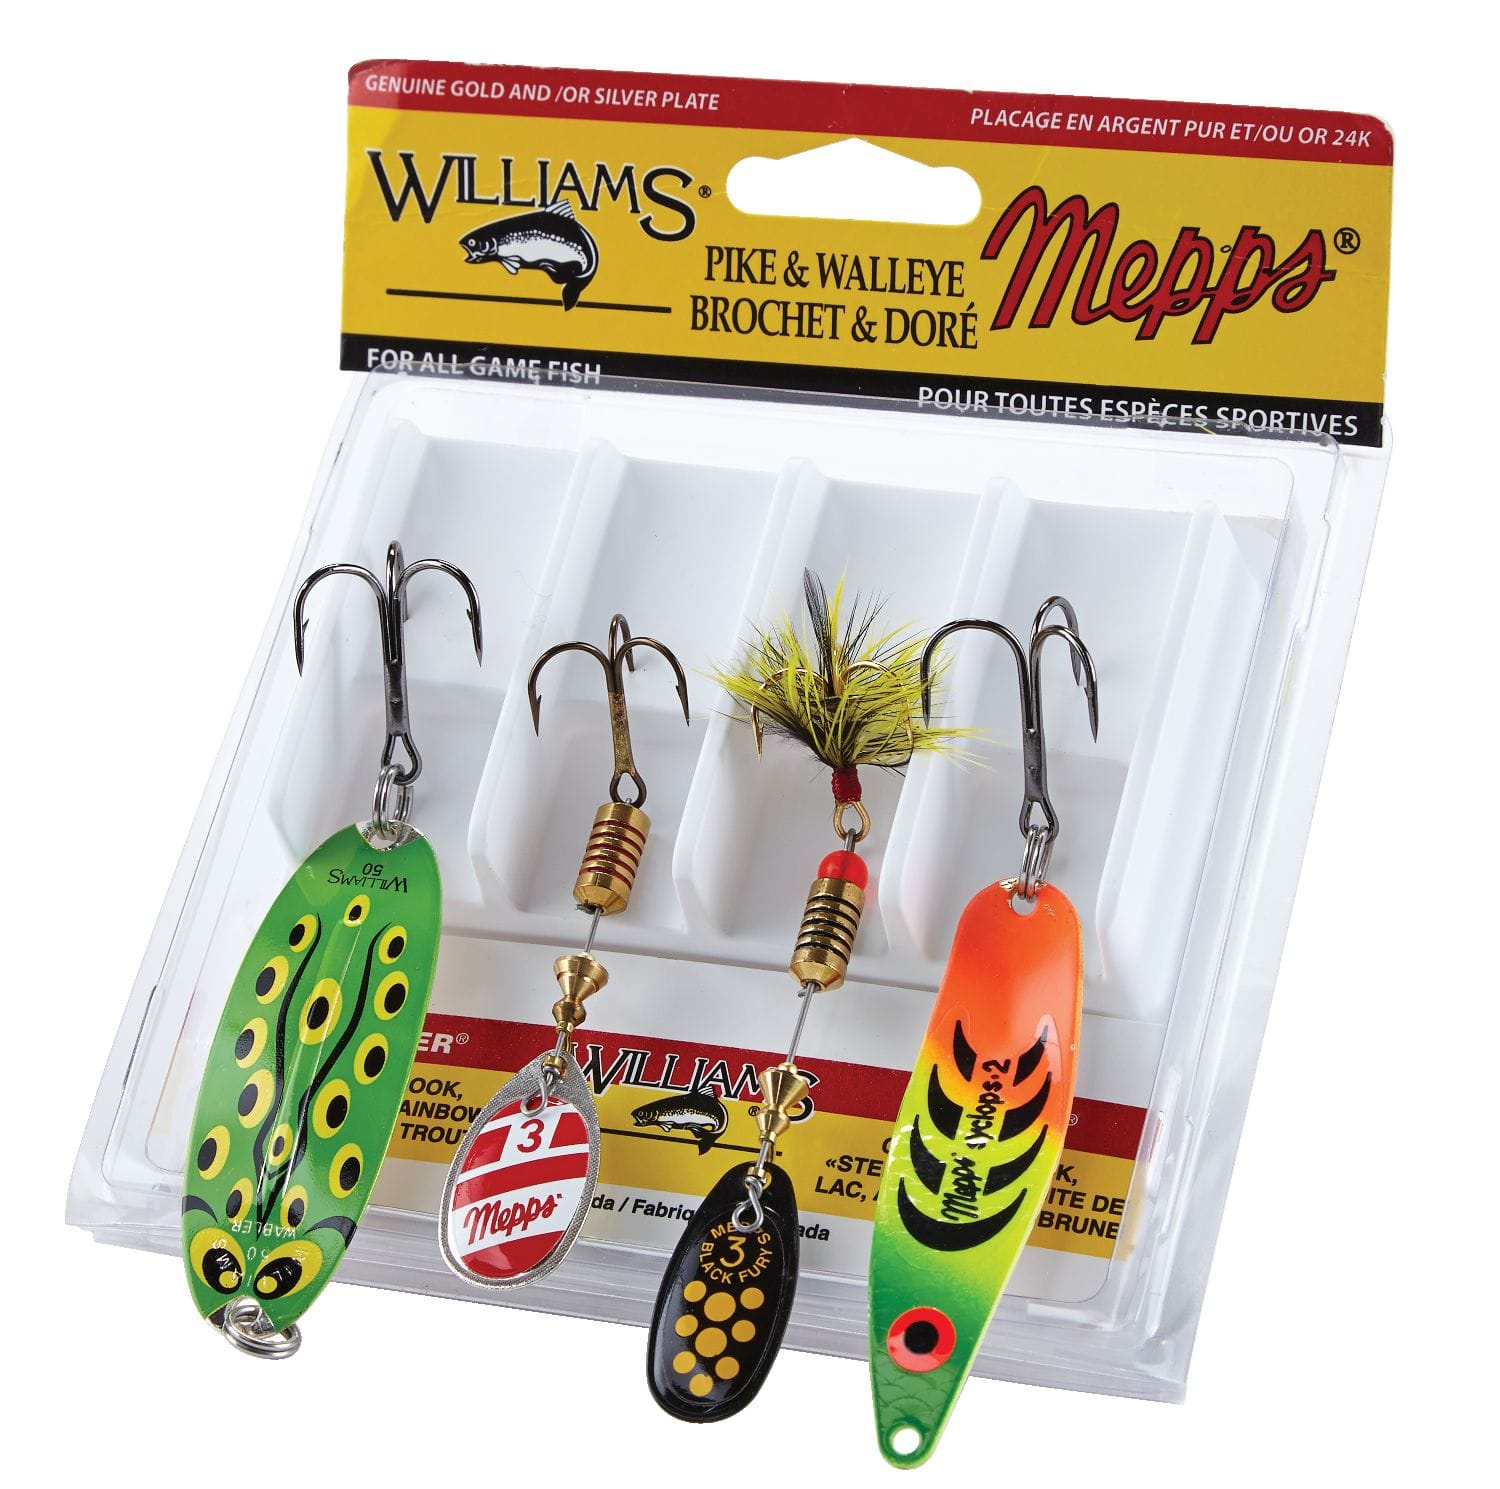 Mepps & Williams Mixed Pike & Walleye Lure Kit, 4-pk